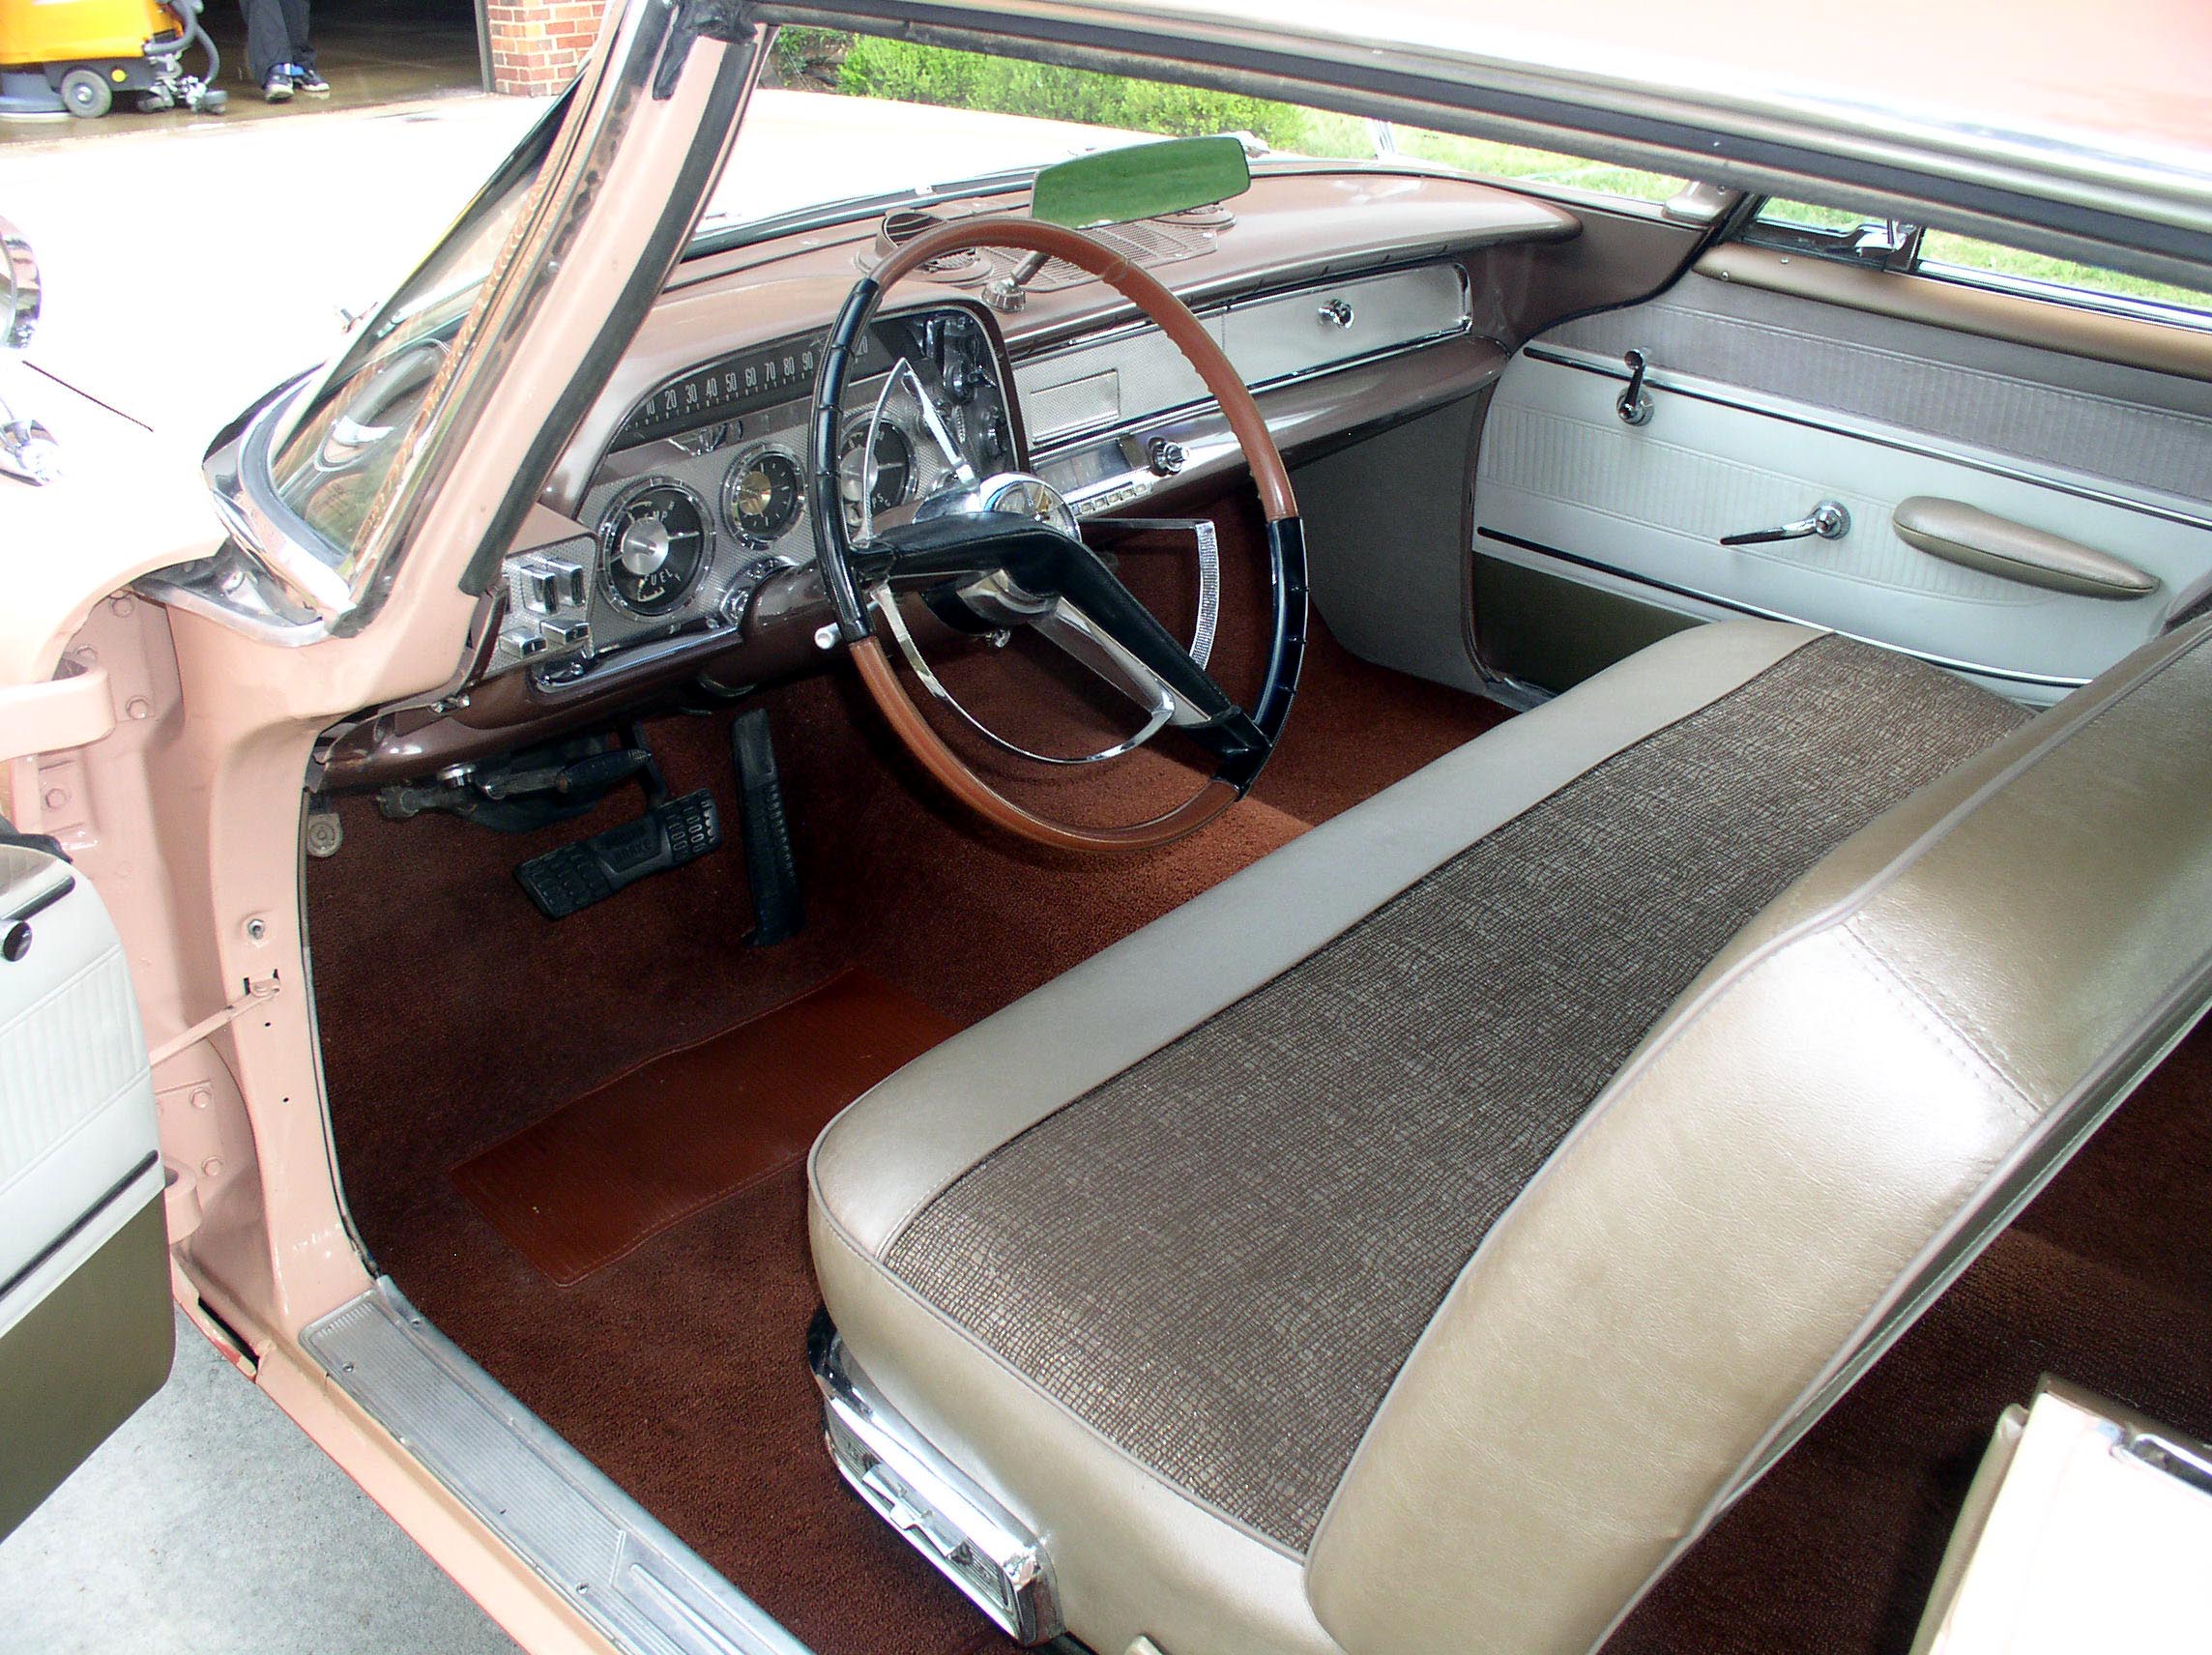 1958 dodge custom sierra